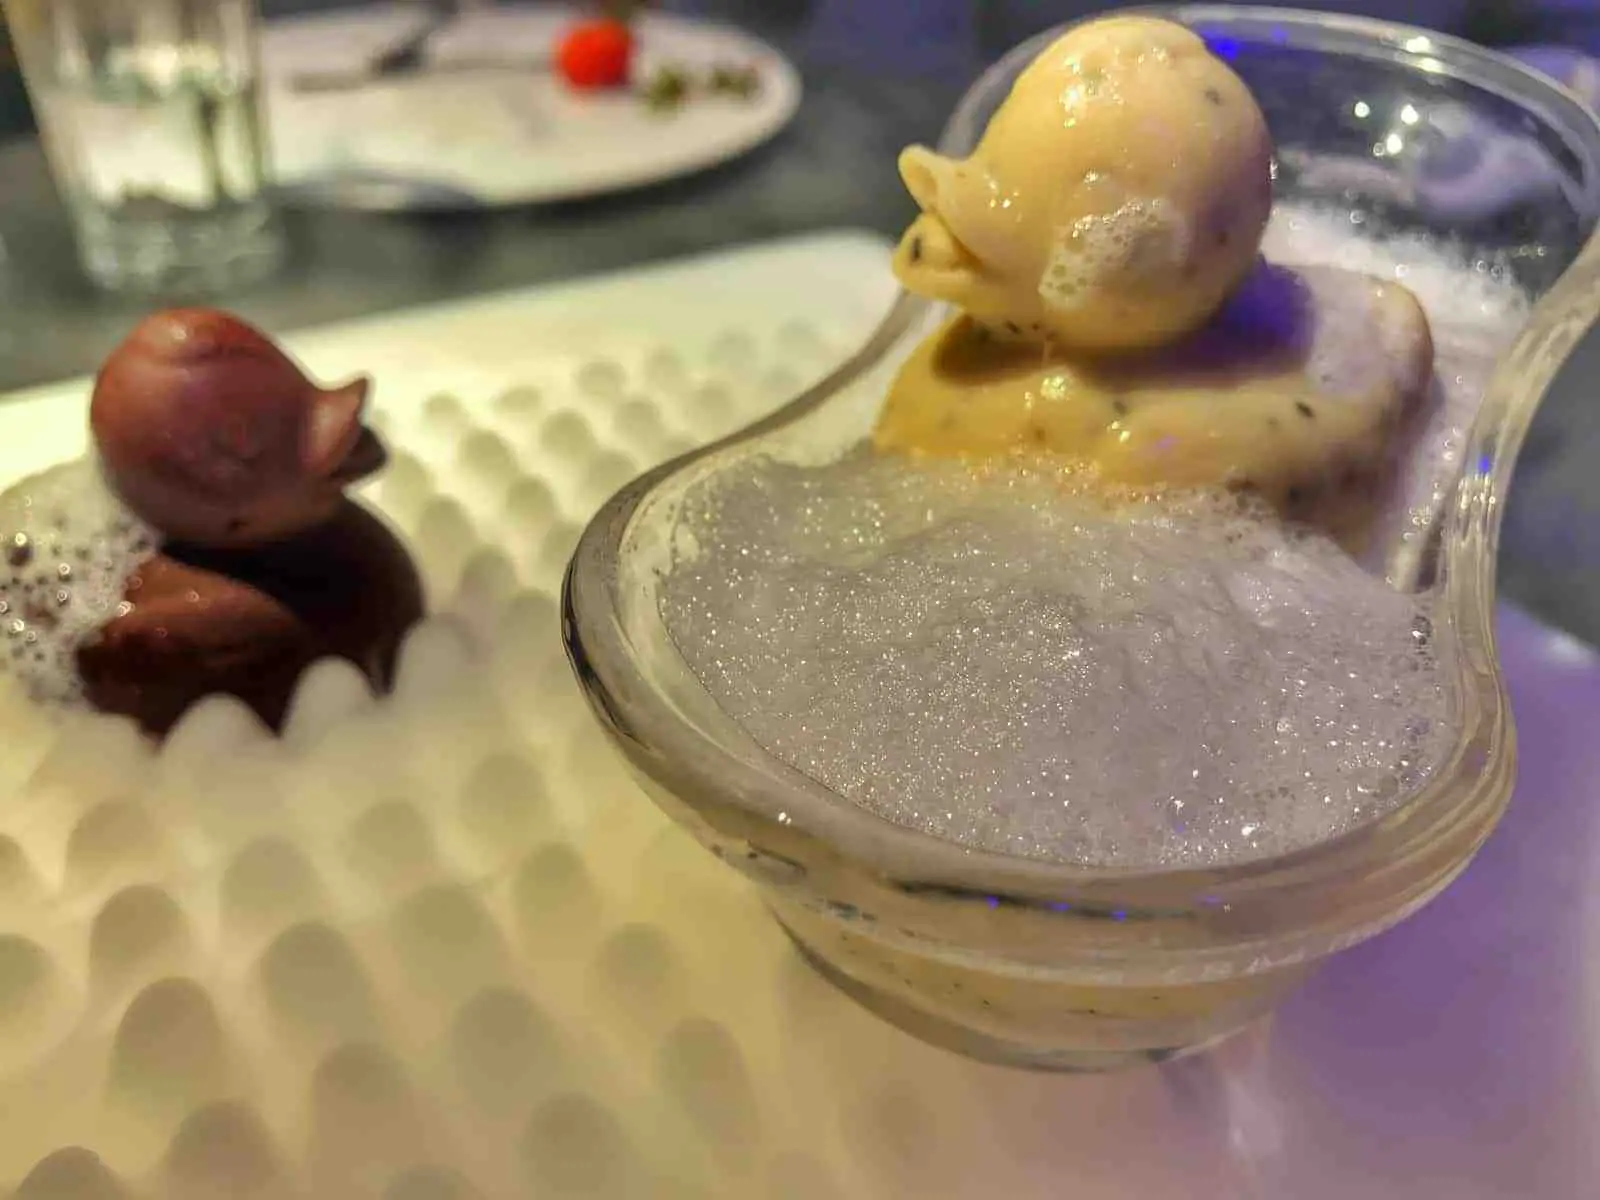 A captivating dessert - white chocolate and milk chocolate ducks set on dry ice.